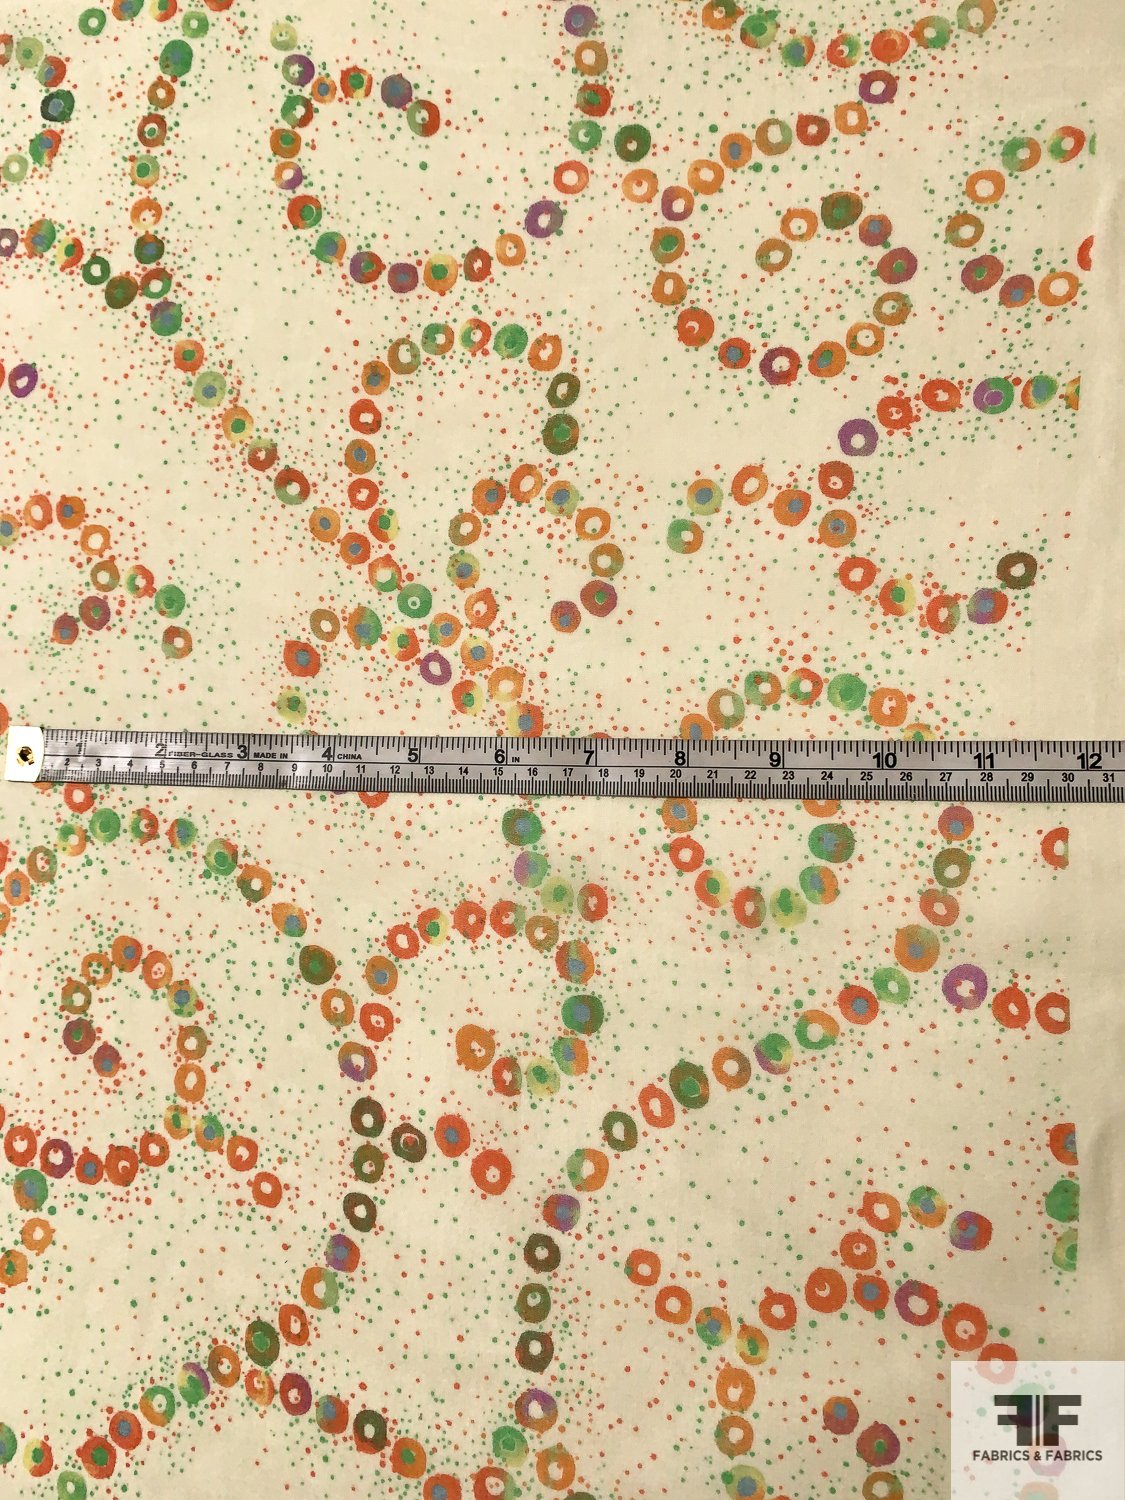 Circles in Swirl Printed Silk Chiffon - Light Eggnog / Orange / Green